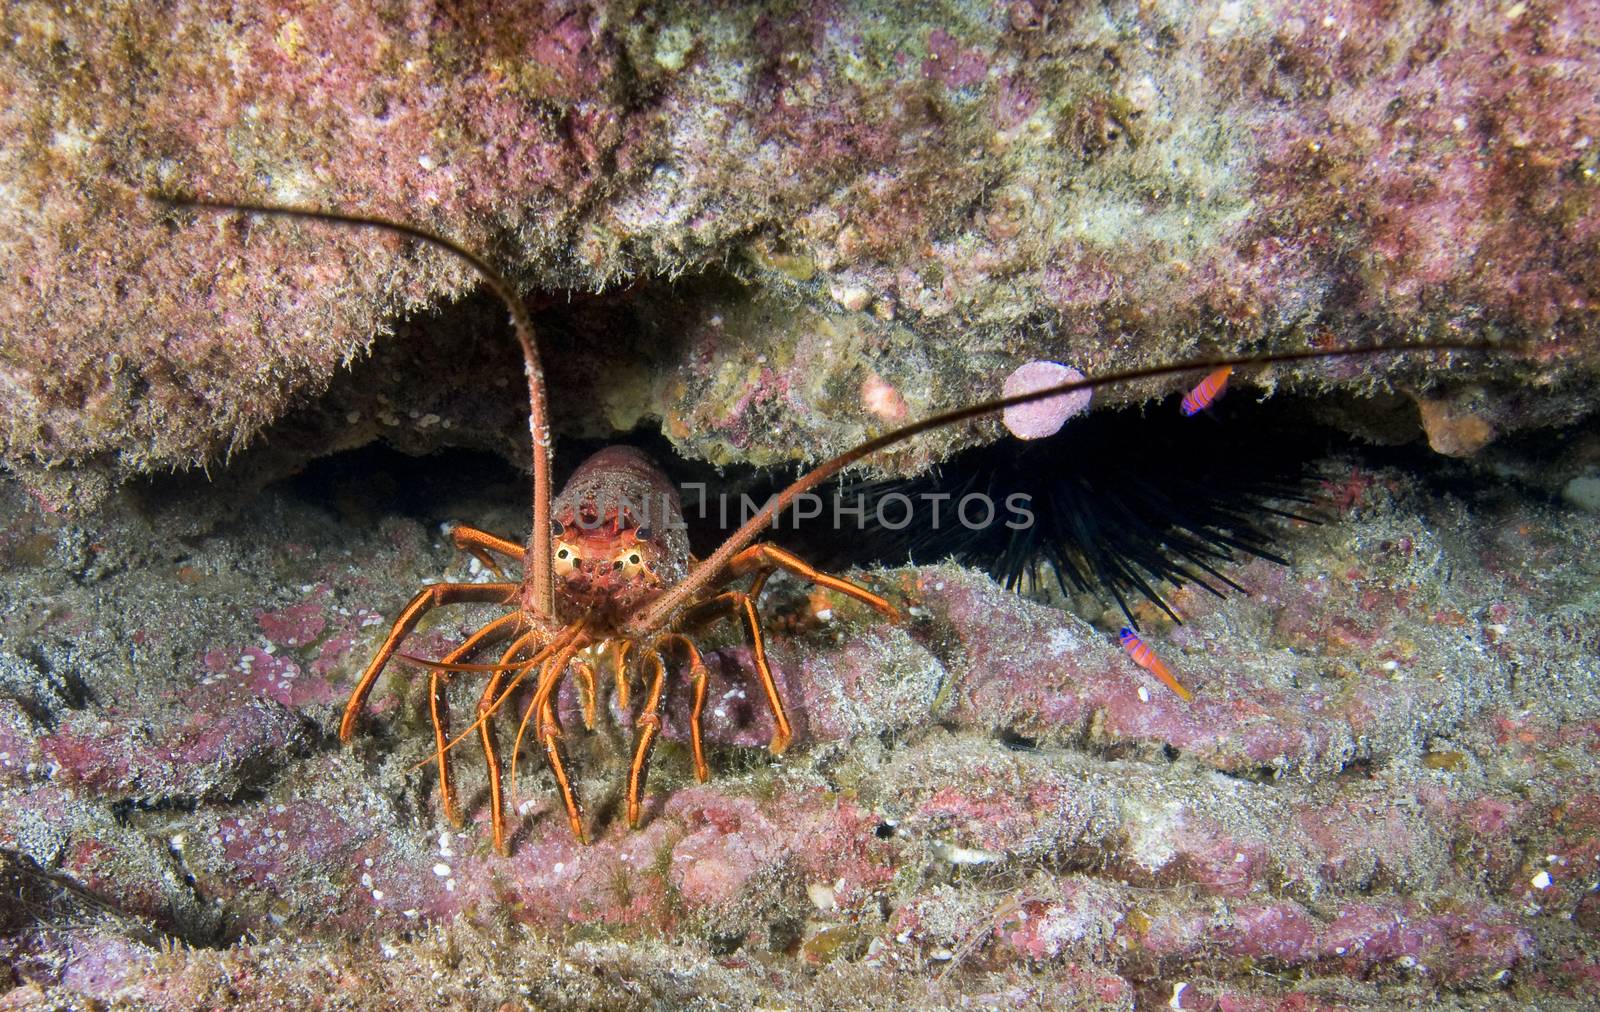 Spiny Lobster (Panulirus interruptus) by Njean